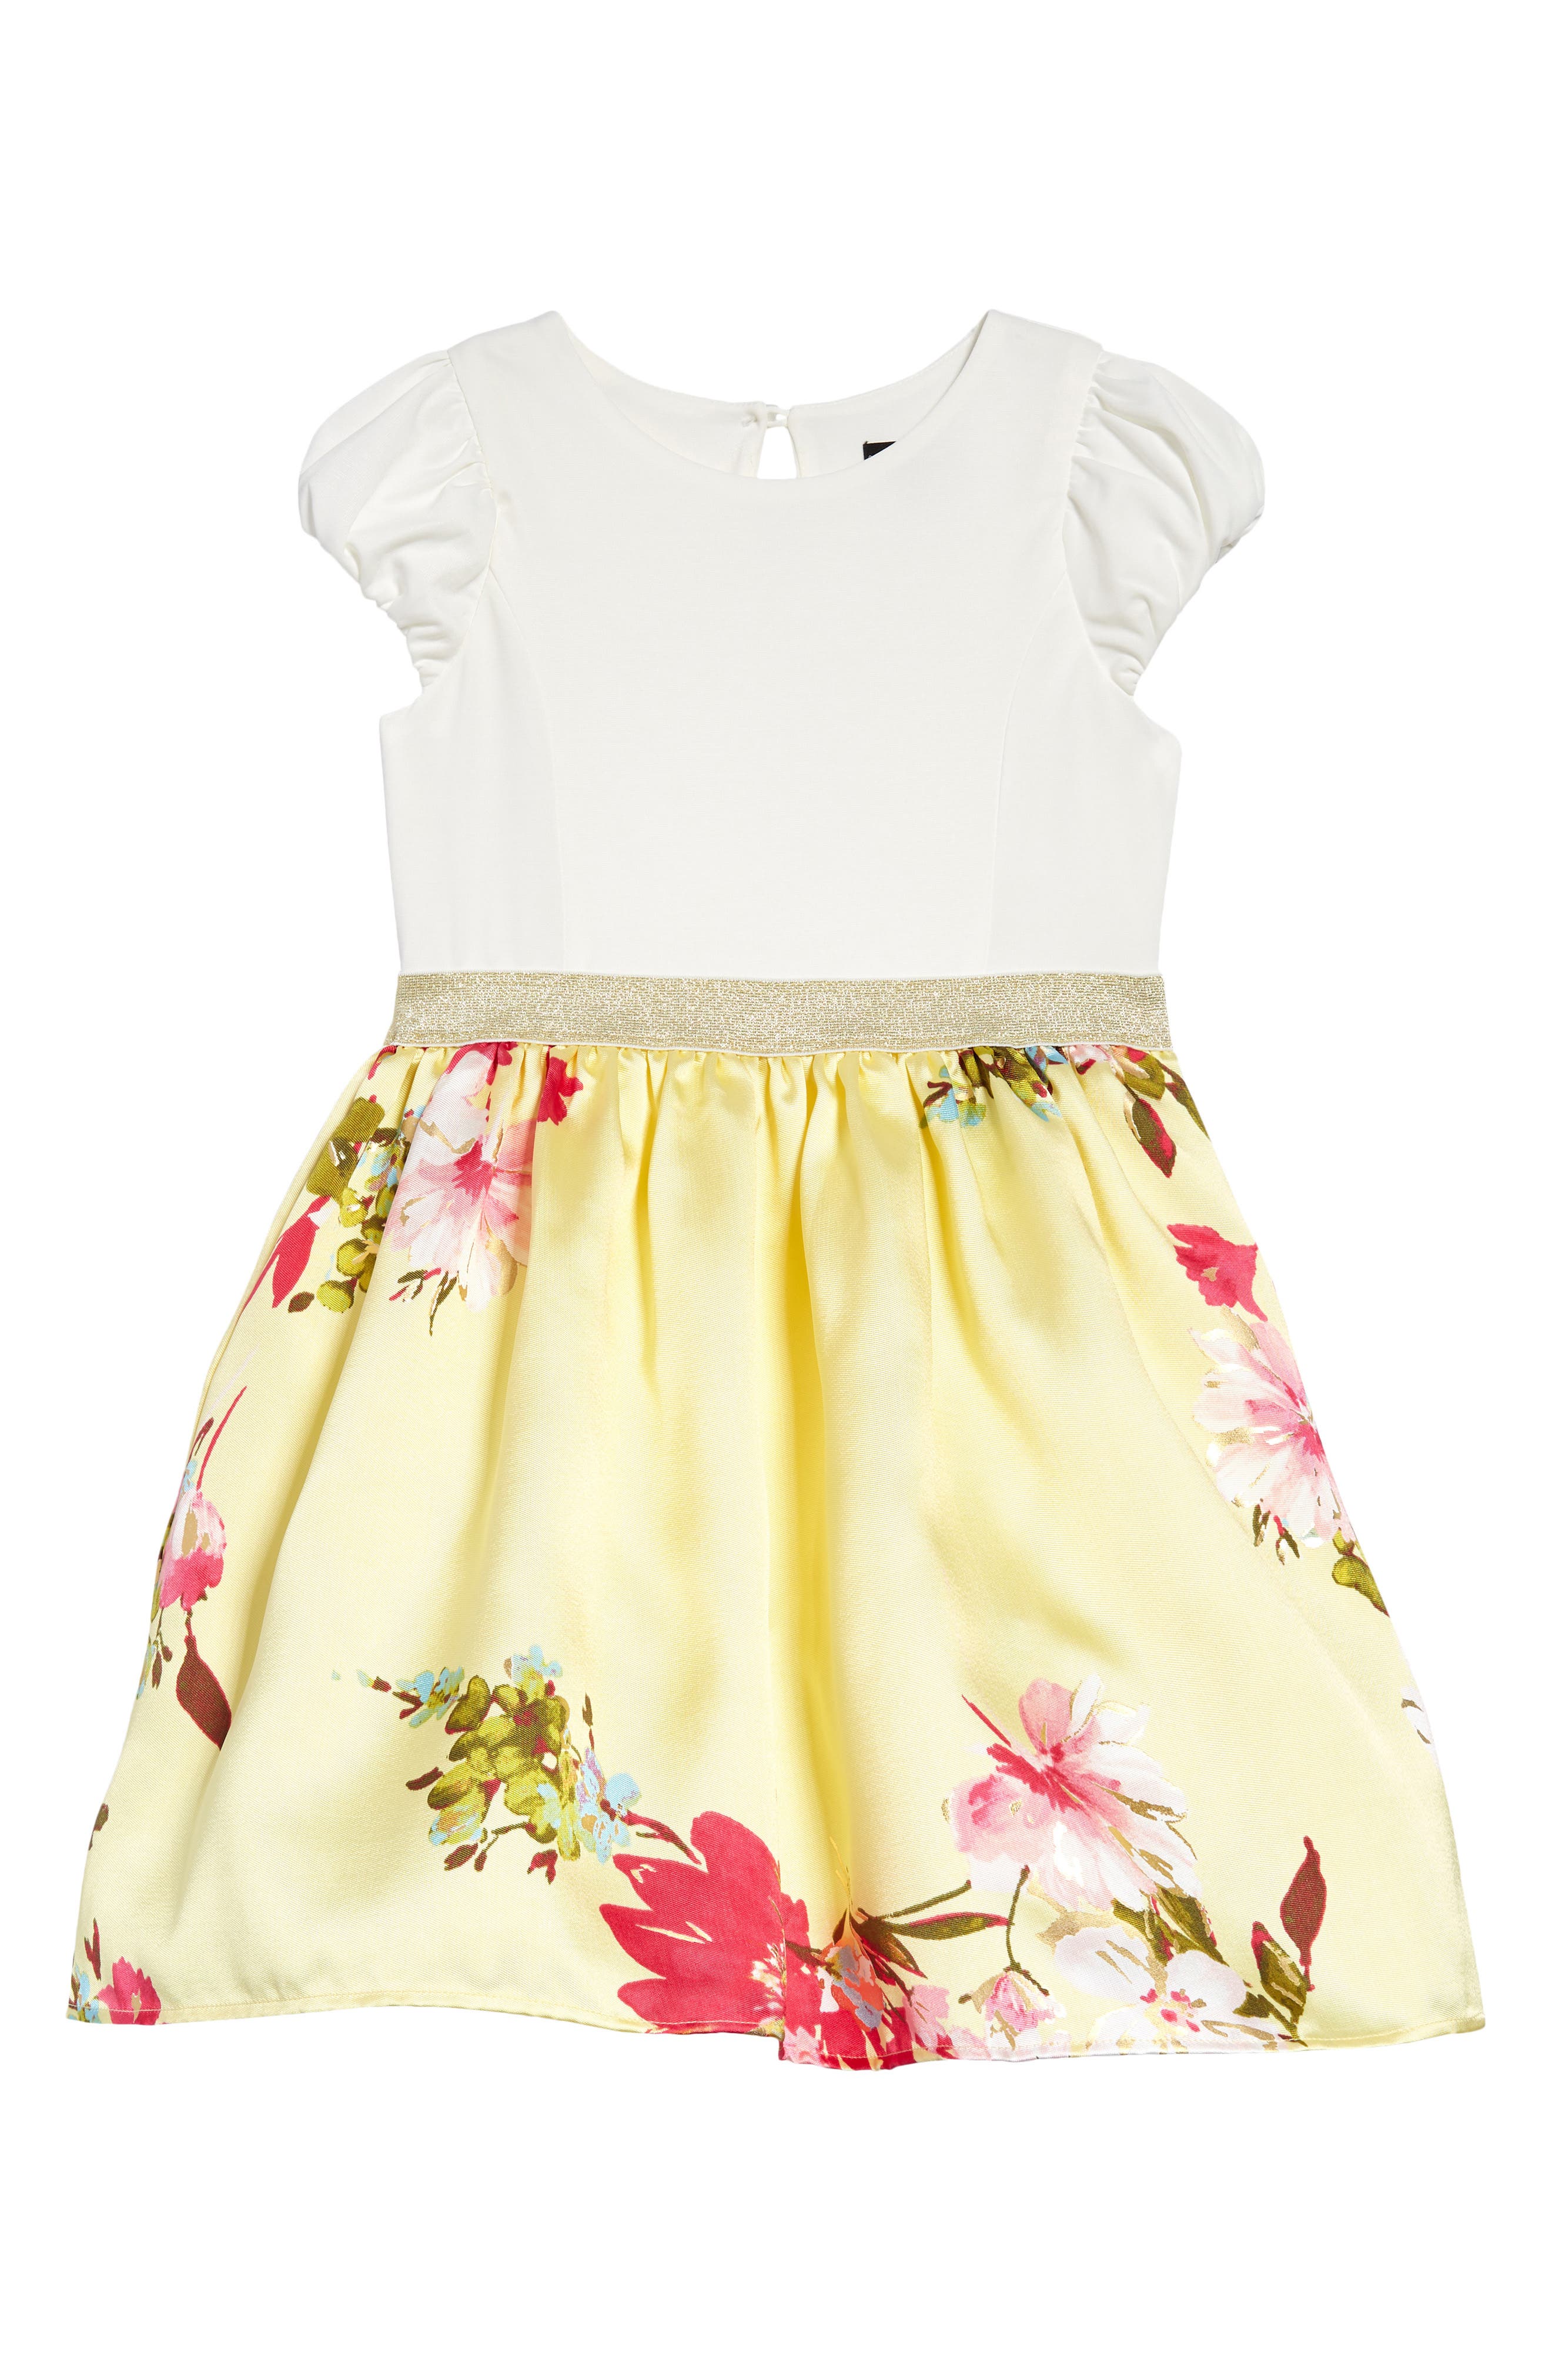 Buy > yellow little girl dresses > in stock